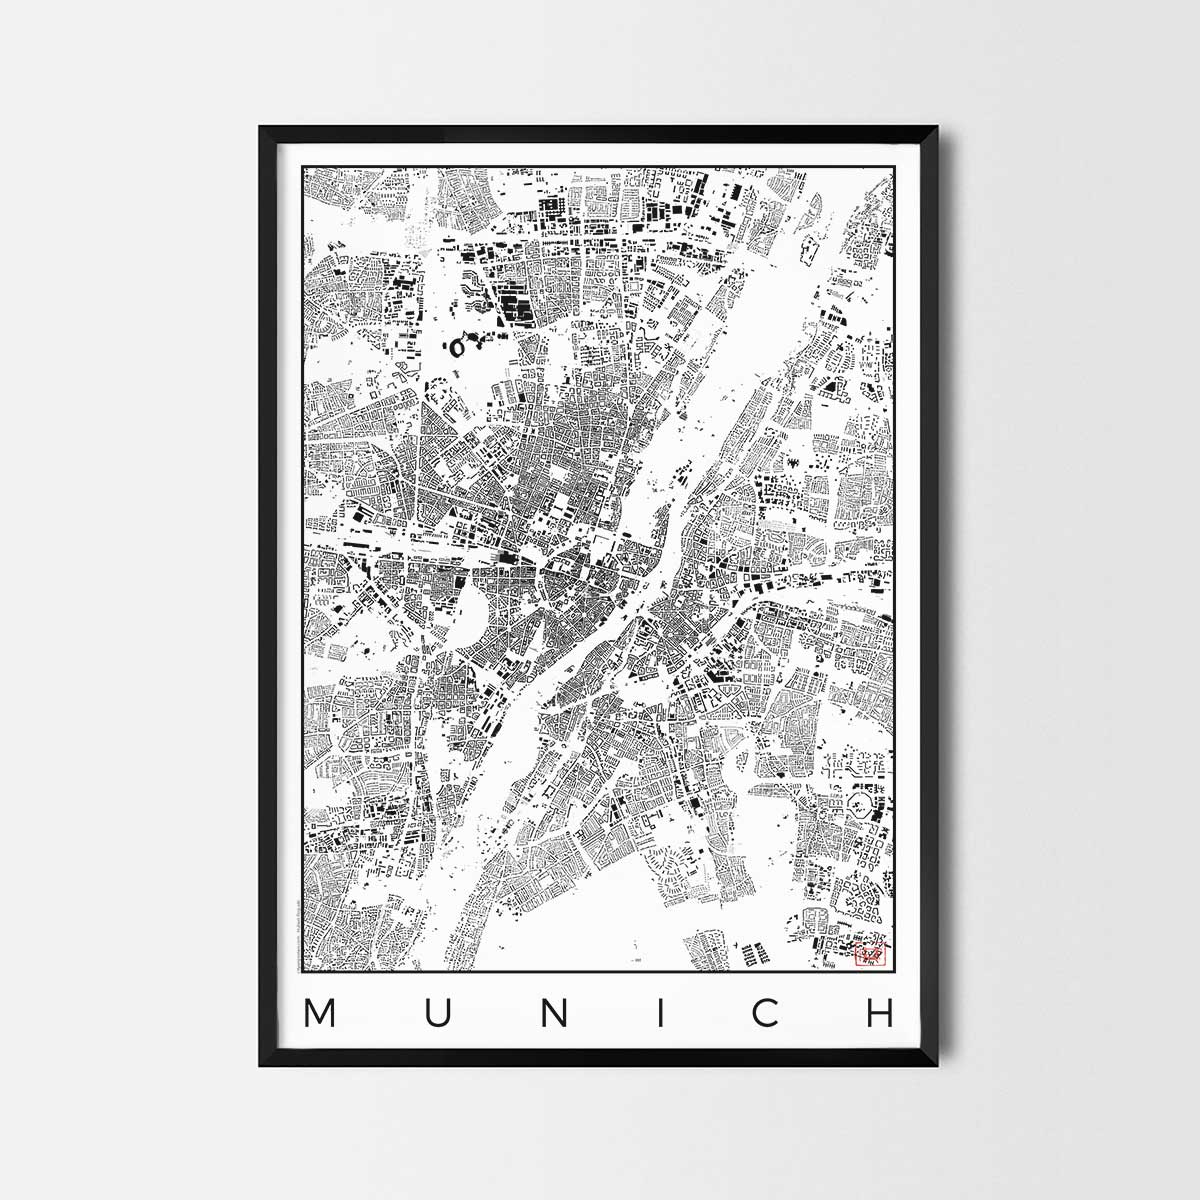 Munich Map Poster schwarzplan Urban plan city map art posters map posters city art prints city posters